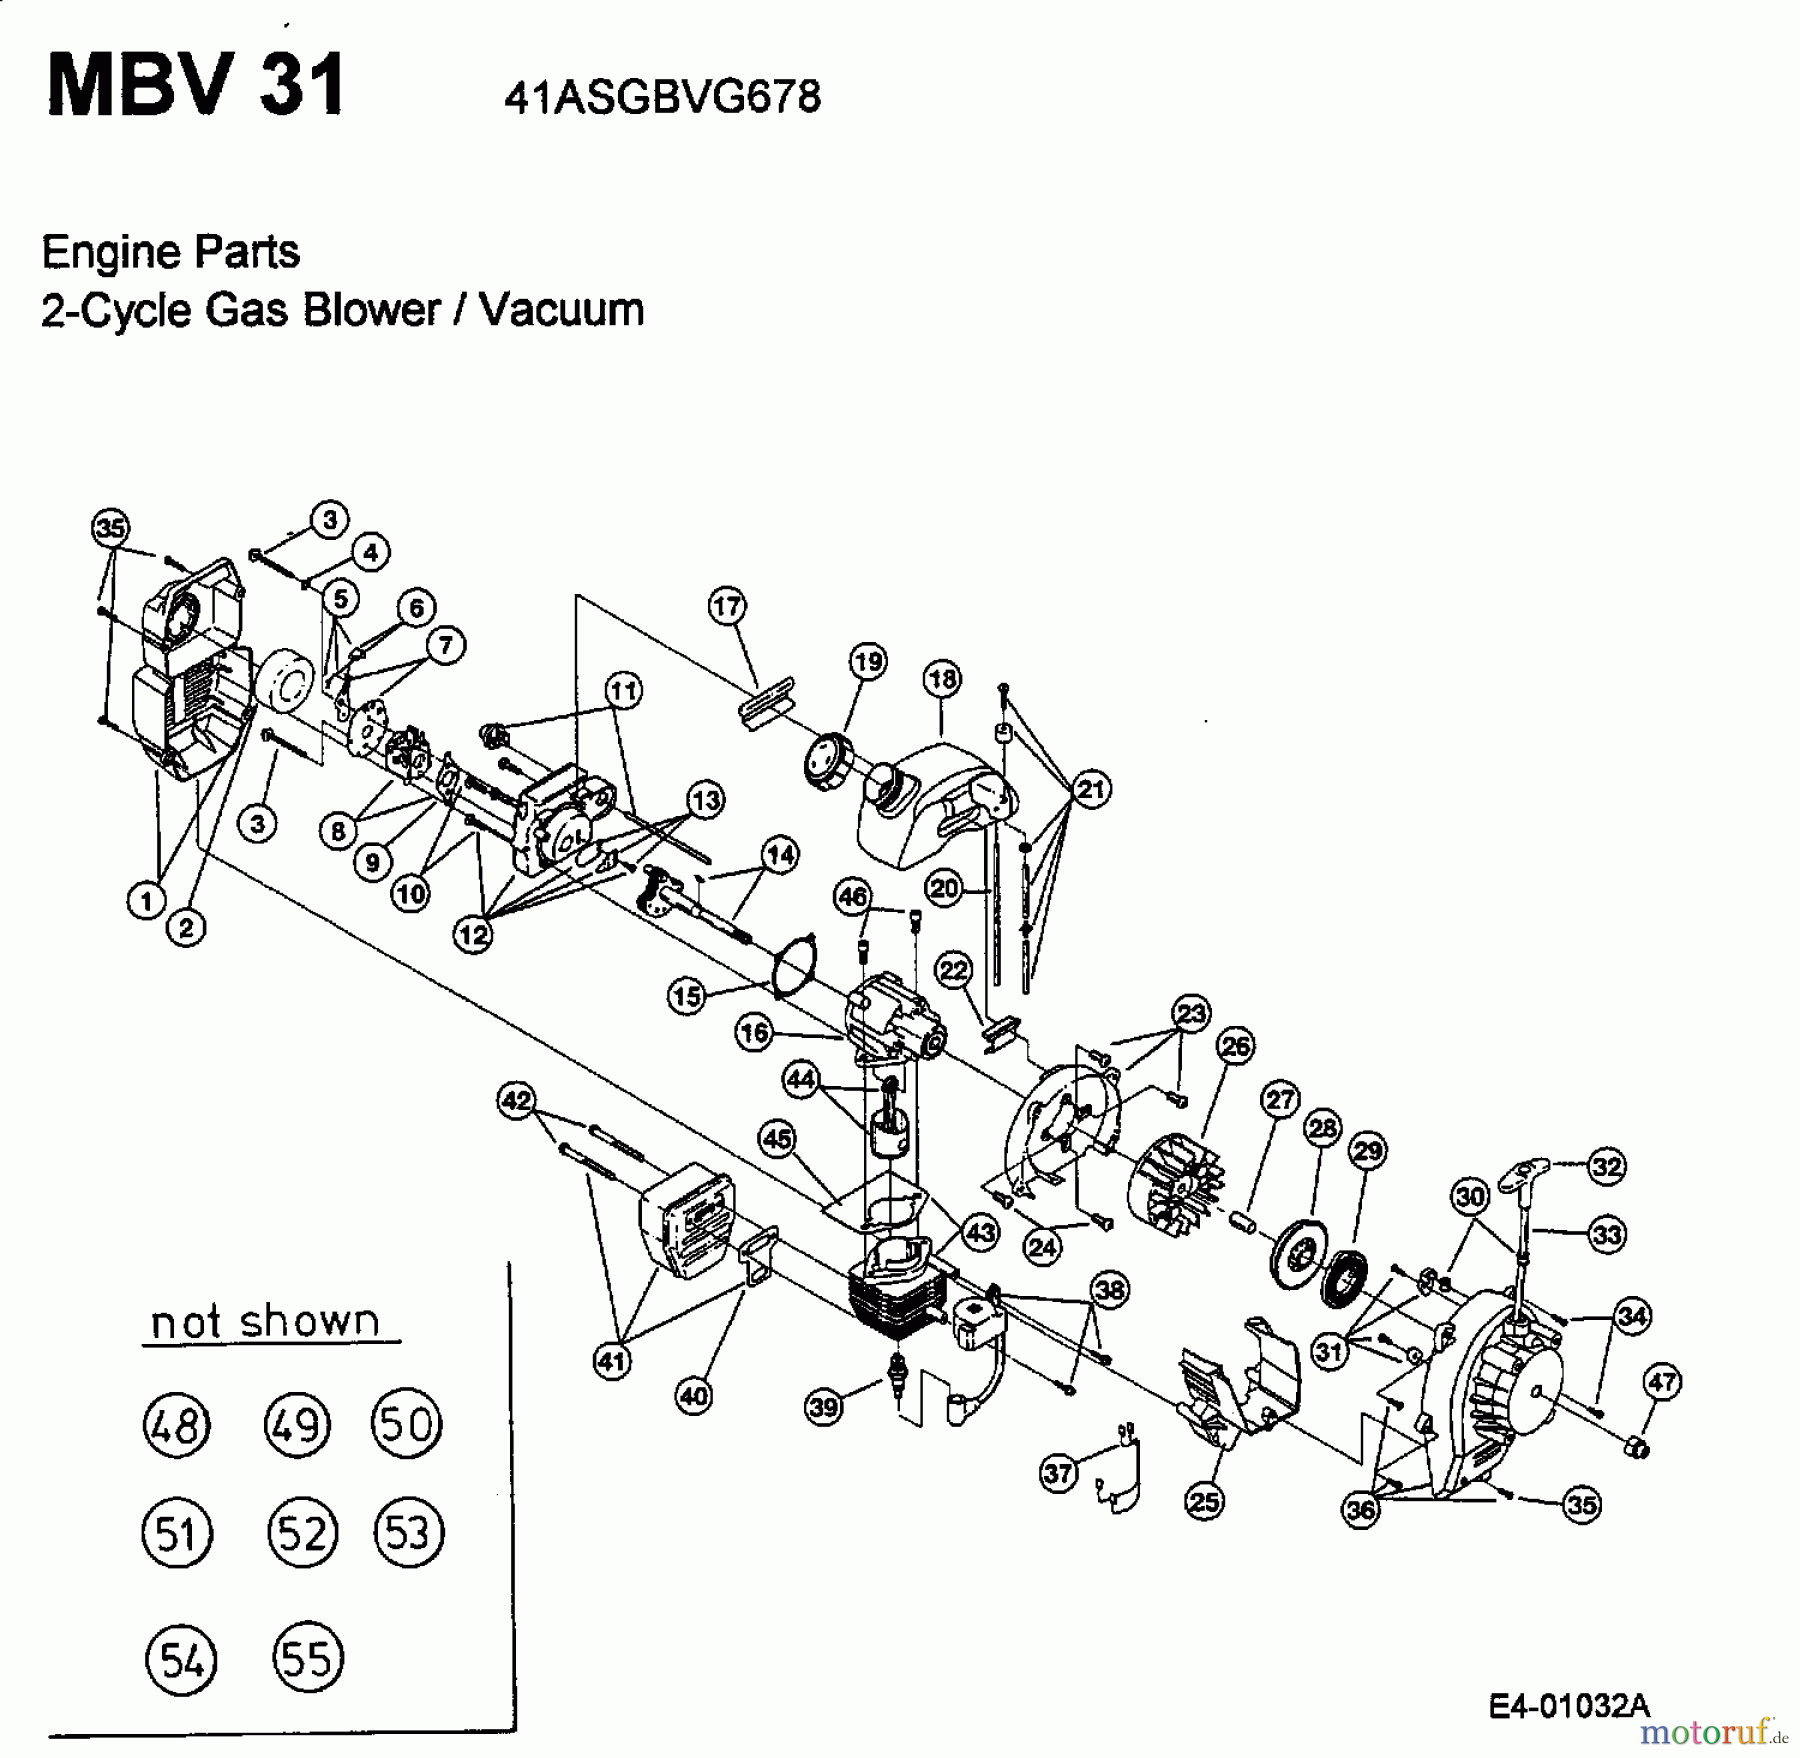  MTD Laubbläser, Laubsauger MBV 31 41ASGBVG678  (2002) Motor